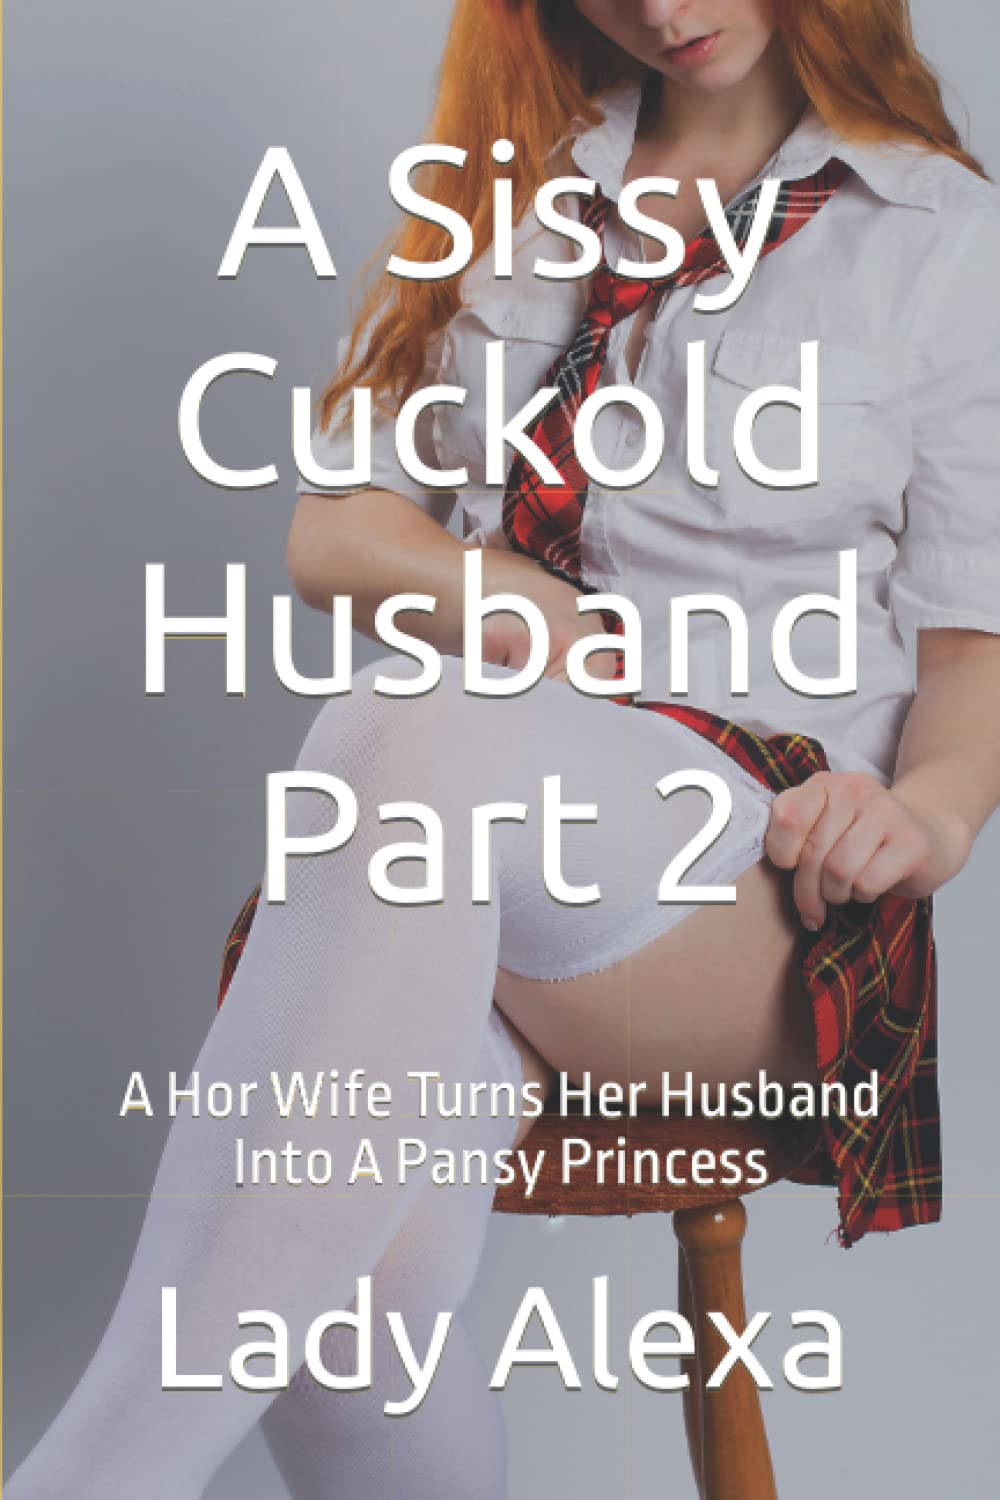 deangelo kidd recommends Sissy Cuckold Husband